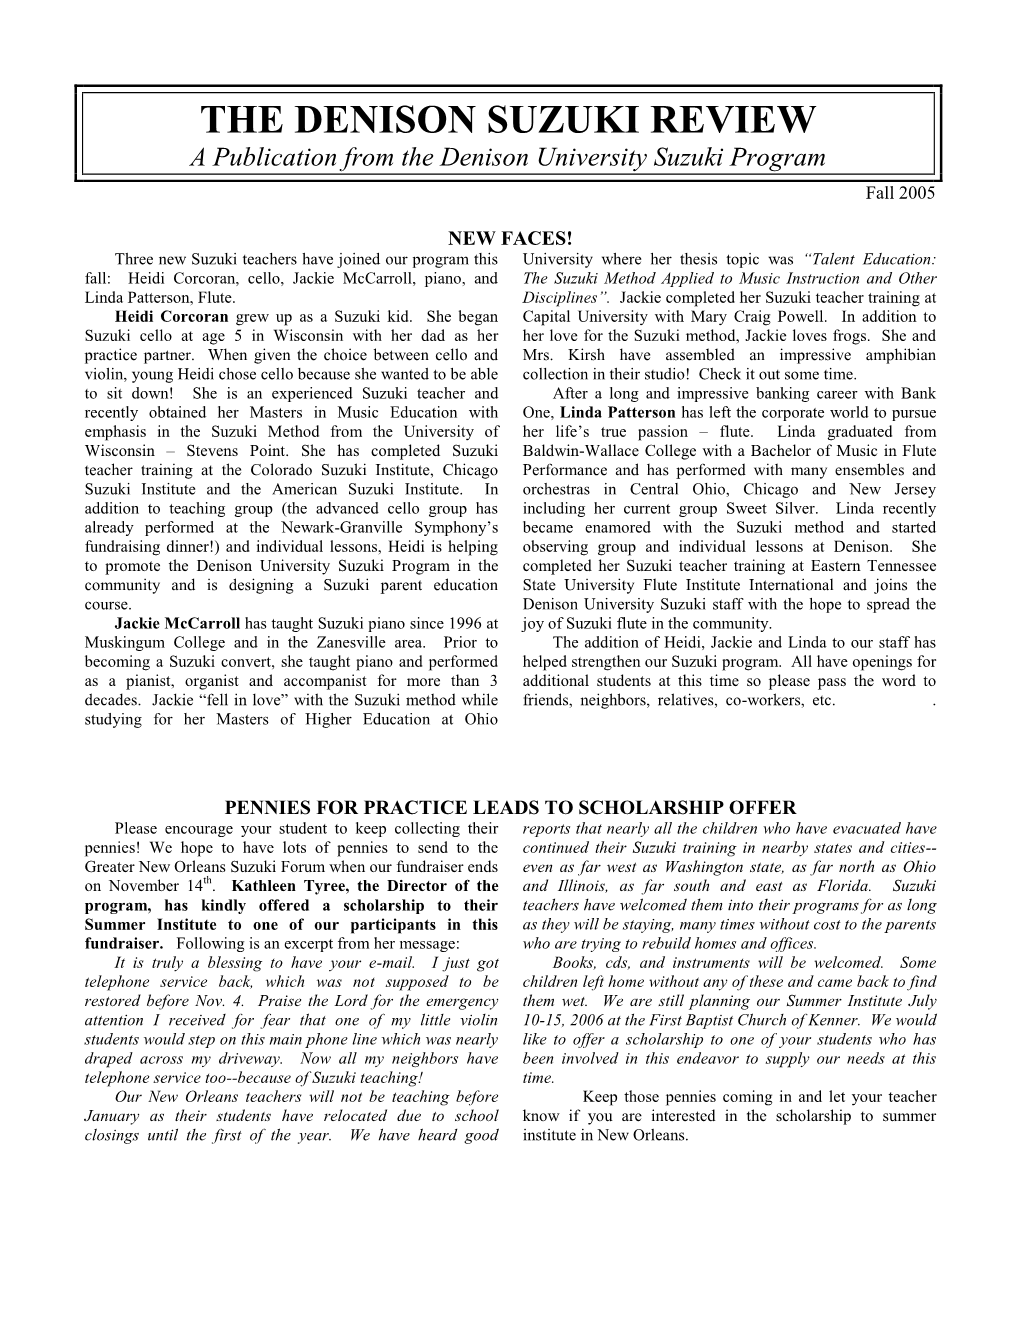 THE DENISON SUZUKI REVIEW a Publication from the Denison University Suzuki Program Fall 2005